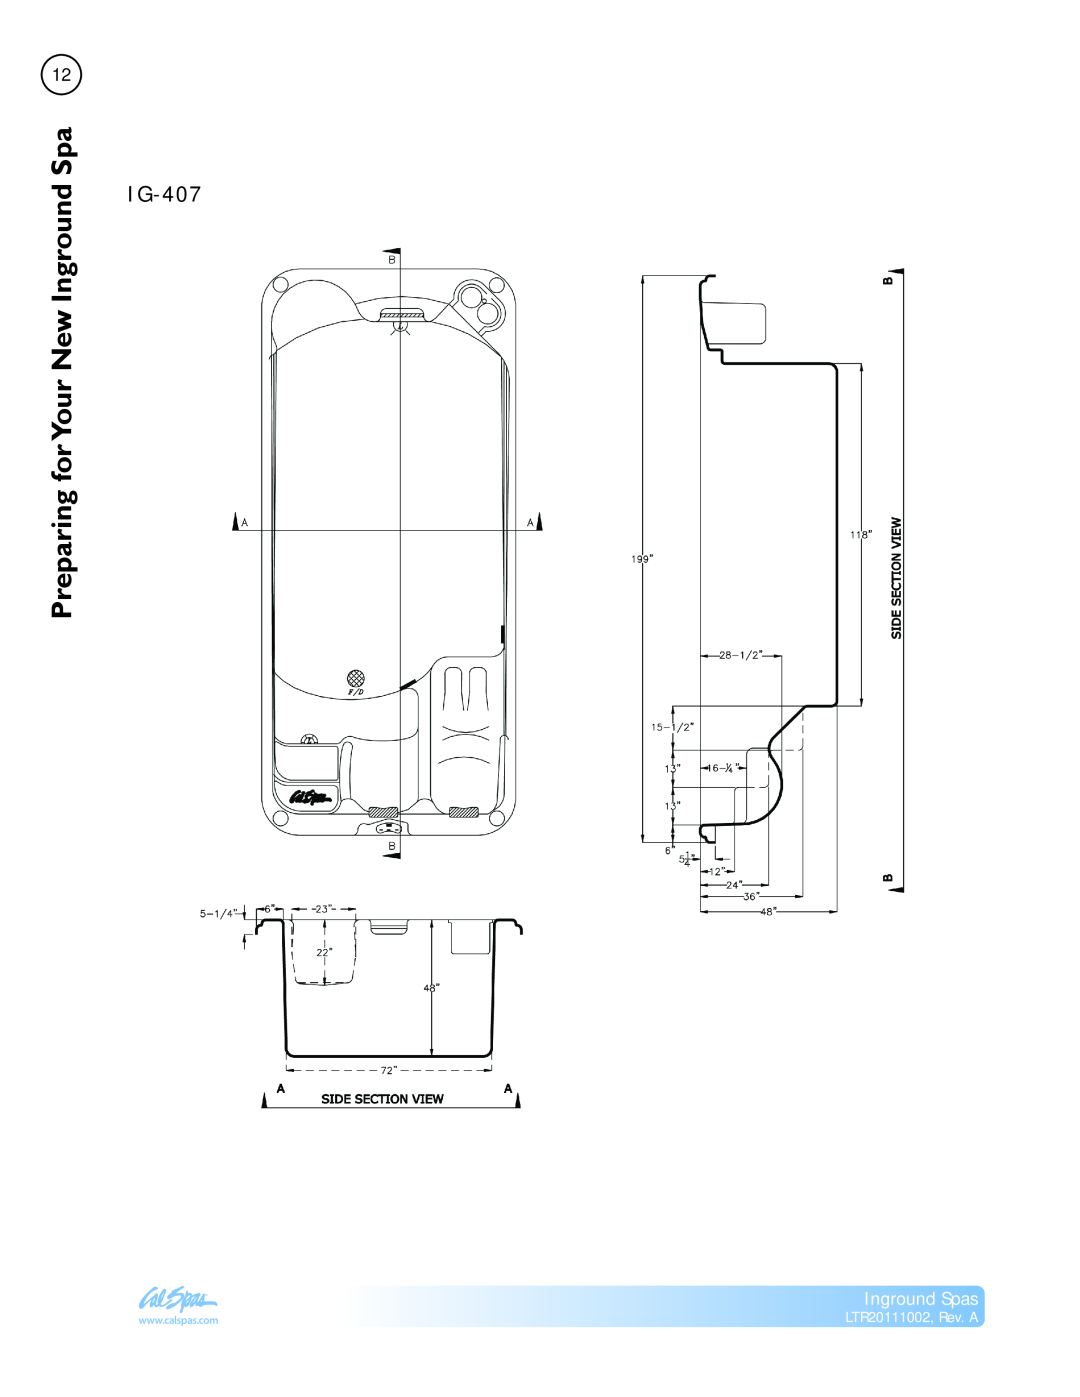 Cal Spas manual IG-407, Preparing forYour New Inground Spa, Inground Spas, LTR20111002, Rev. A 